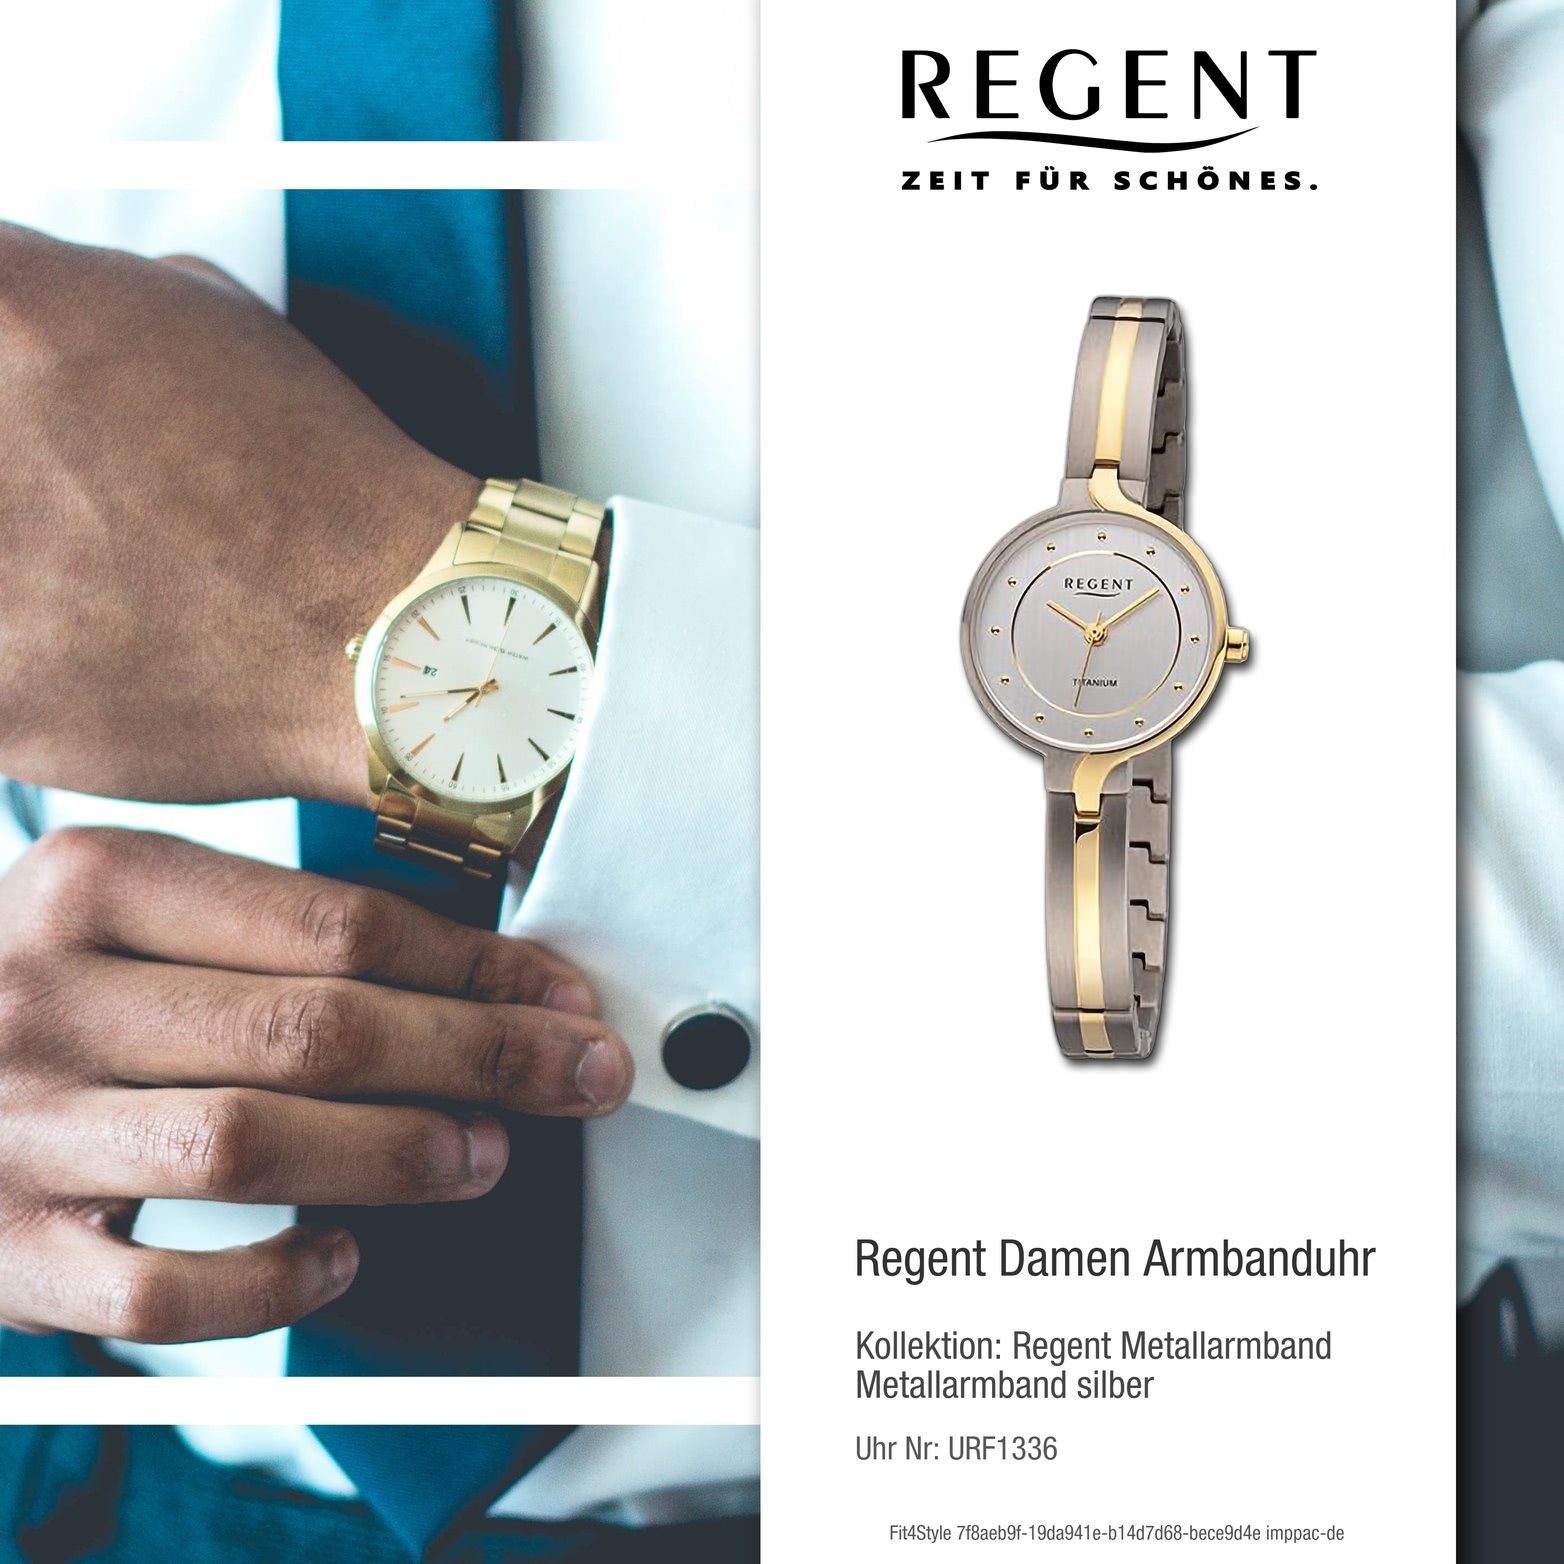 Gehäuse Regent gold, Quarzuhr (ca. Metallarmband Damenuhr Regent Armbanduhr Analog, groß 26mm) Damen silber, rundes